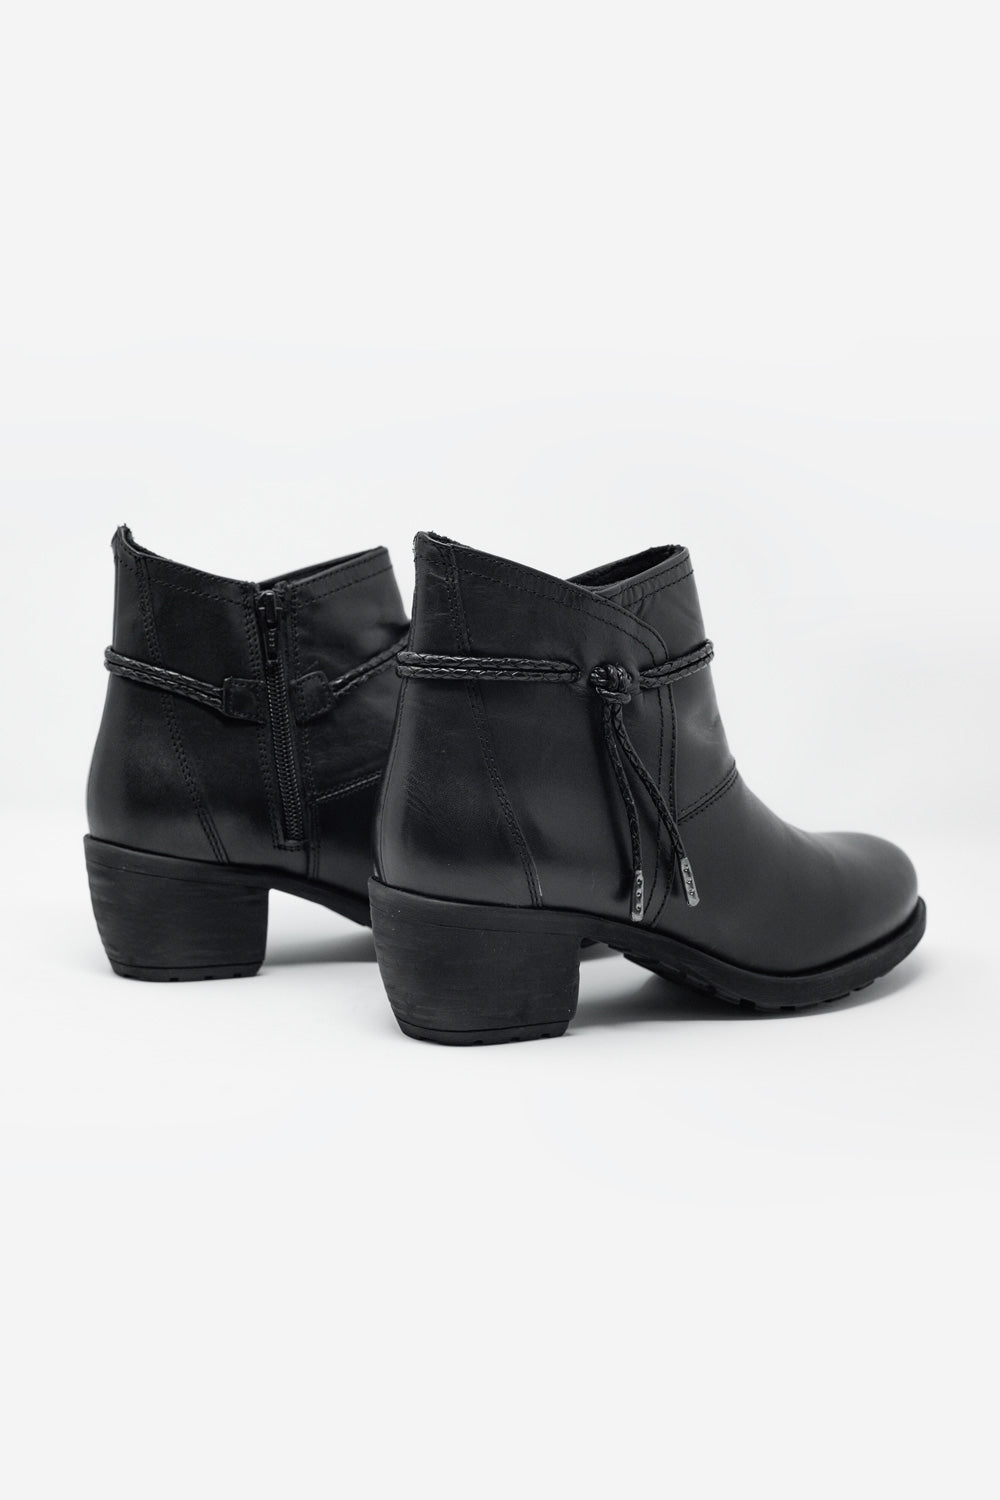 Black blocked mid heeled ankle bootsShoes